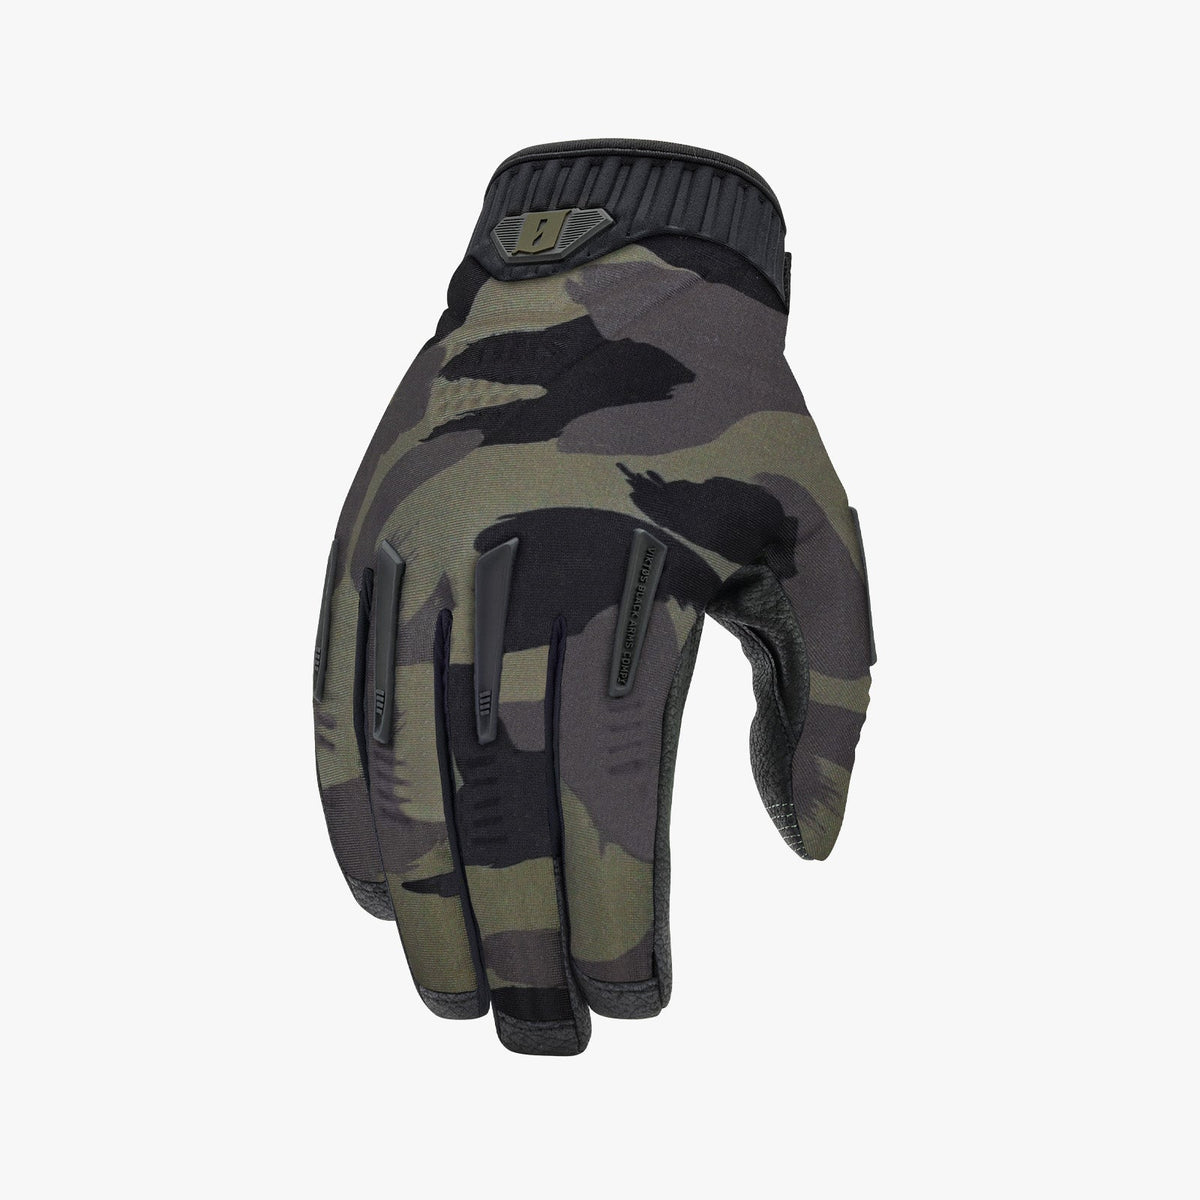 VIKTOS Warlock Insulated Gloves Fatigue Tactical Gear Australia Supplier Distributor Dealer